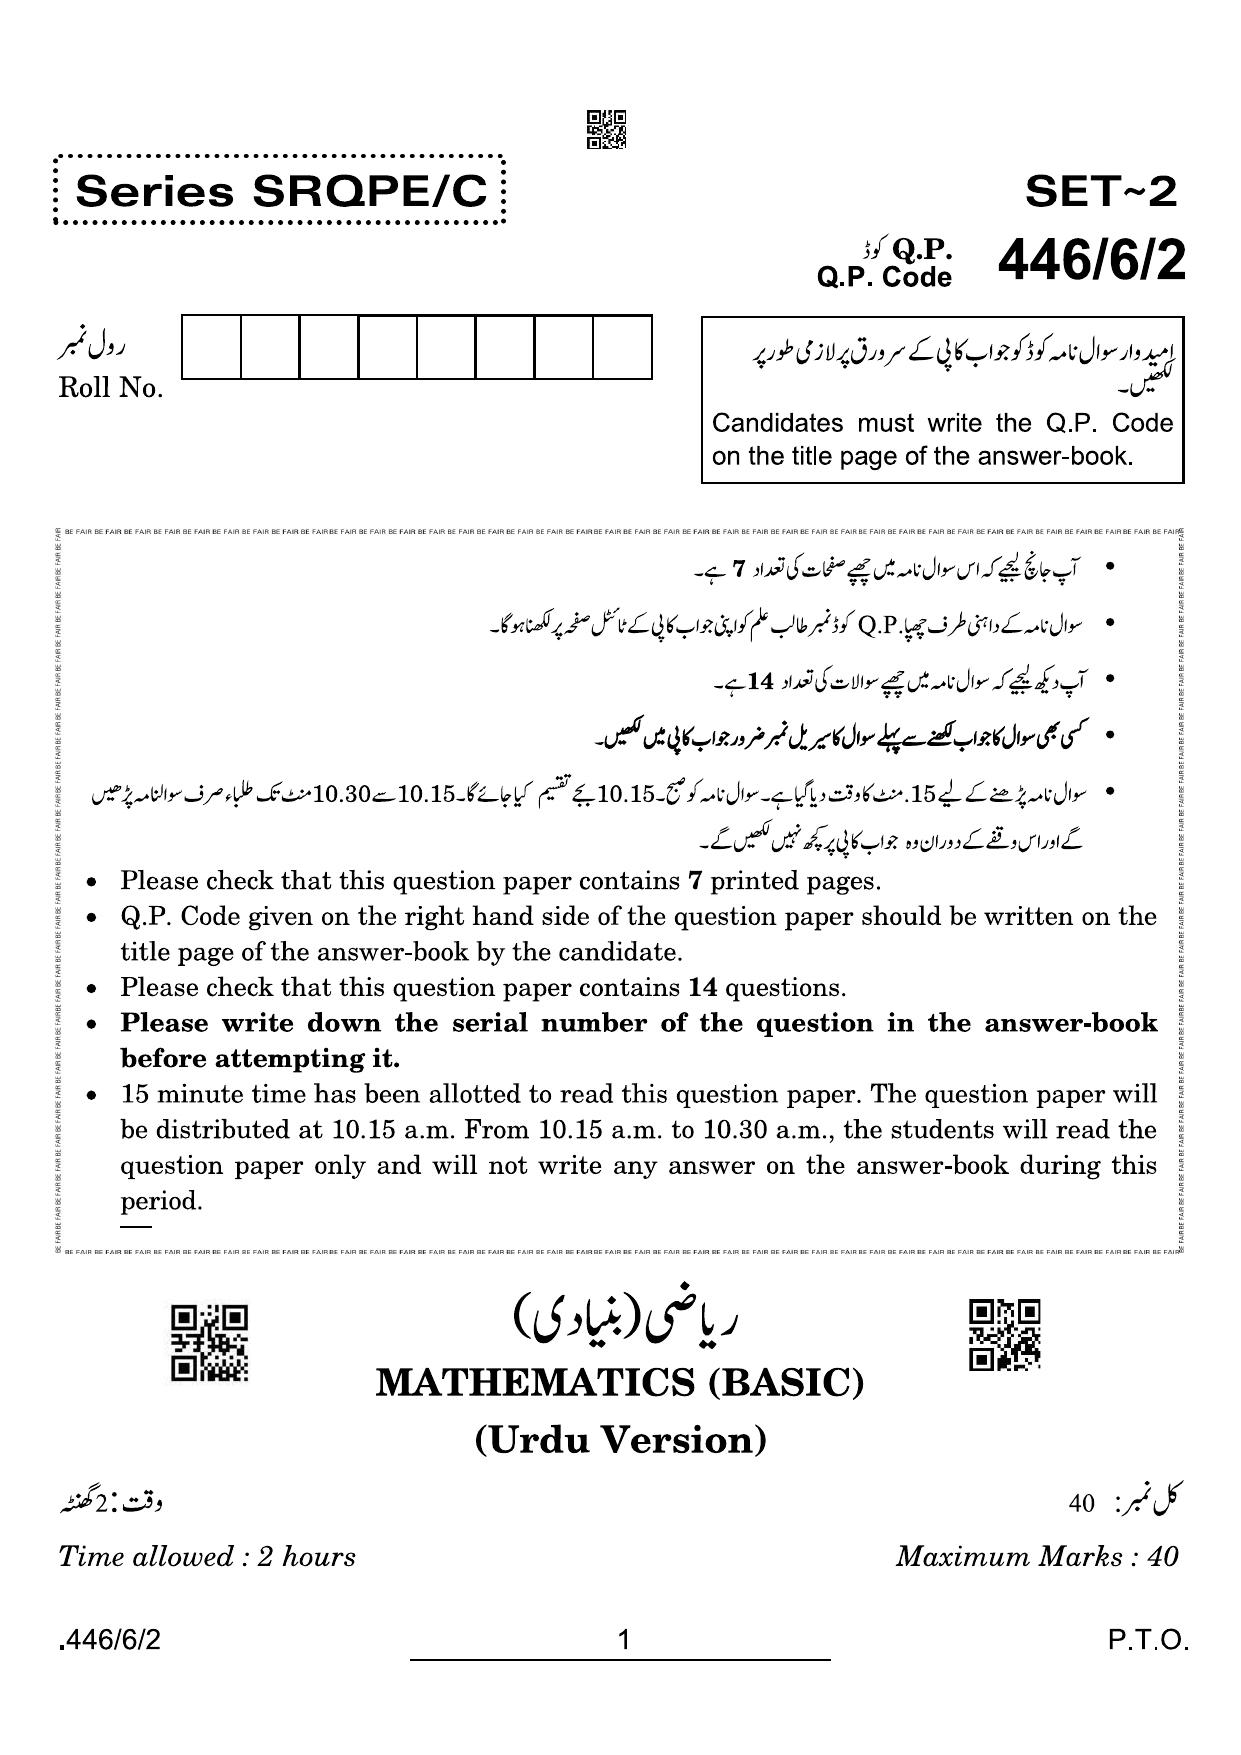 CBSE Class 10 446-6-2 Maths Basic Urdu 2022 Compartment Question Paper - Page 1